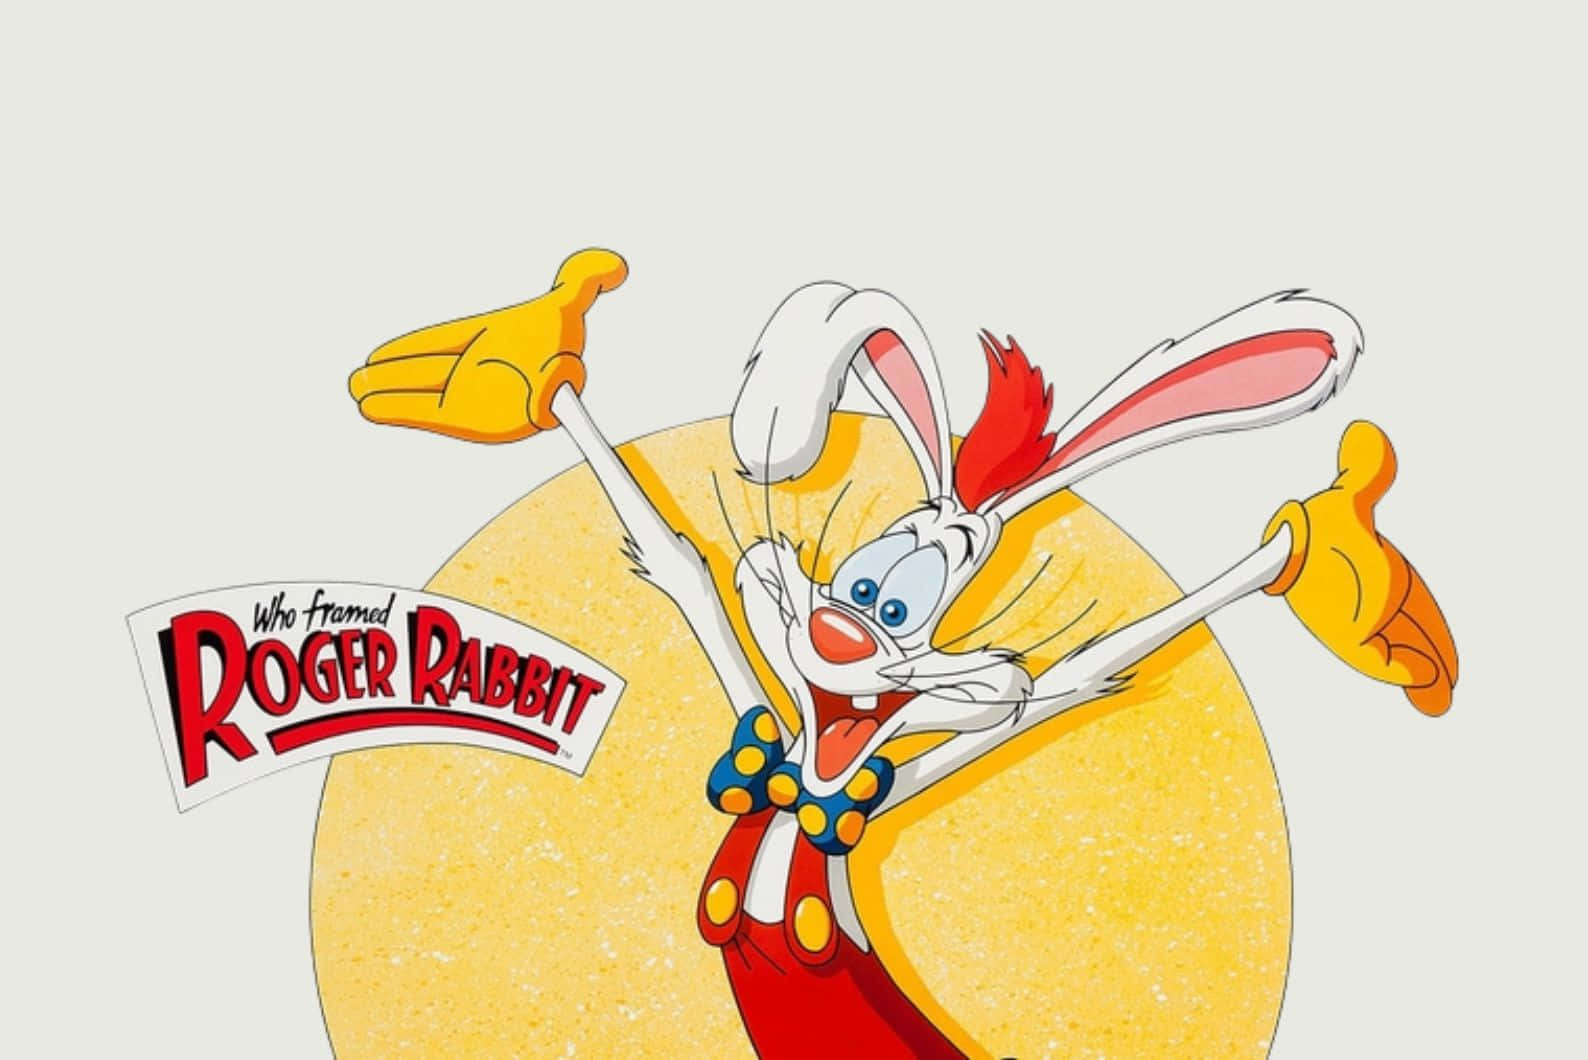 Roger Rabbit Cartoon Character Pose Background